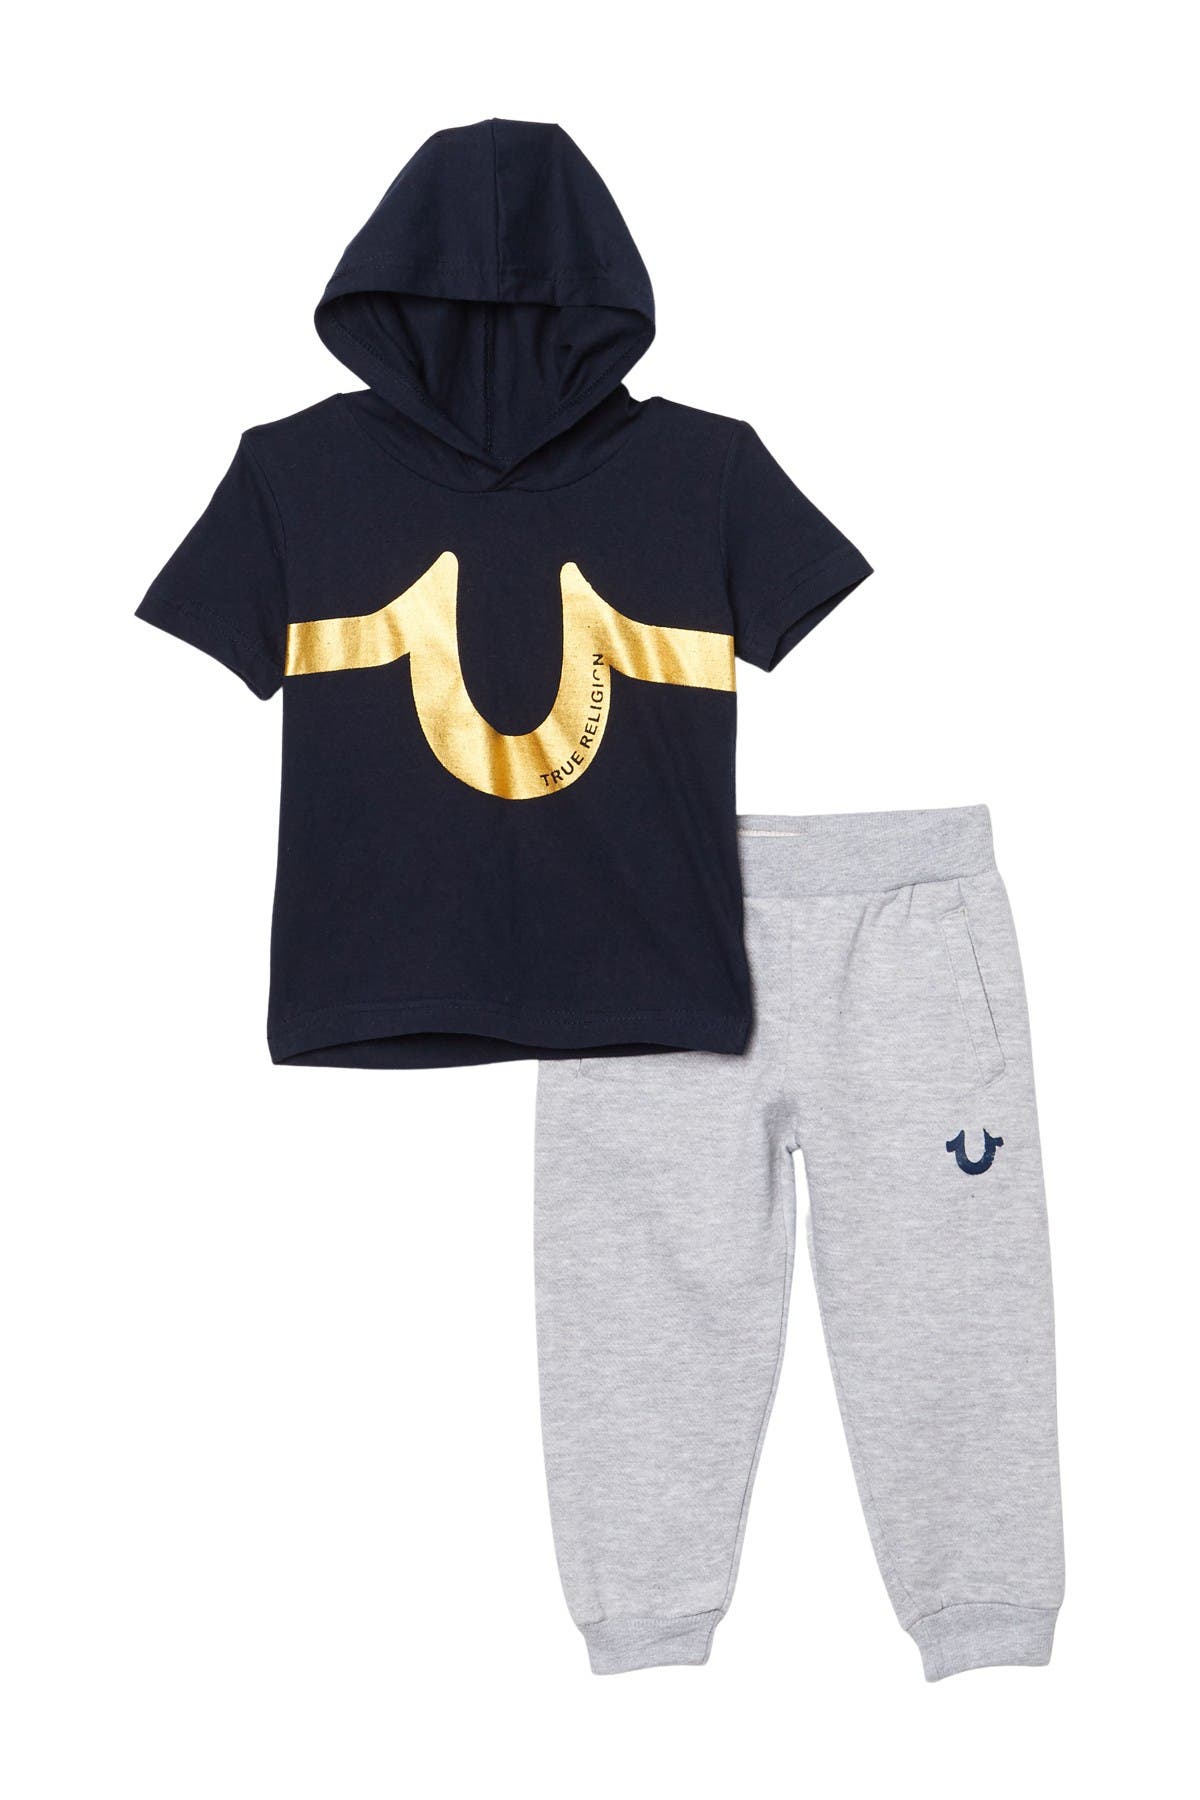 true religion clothes for babies